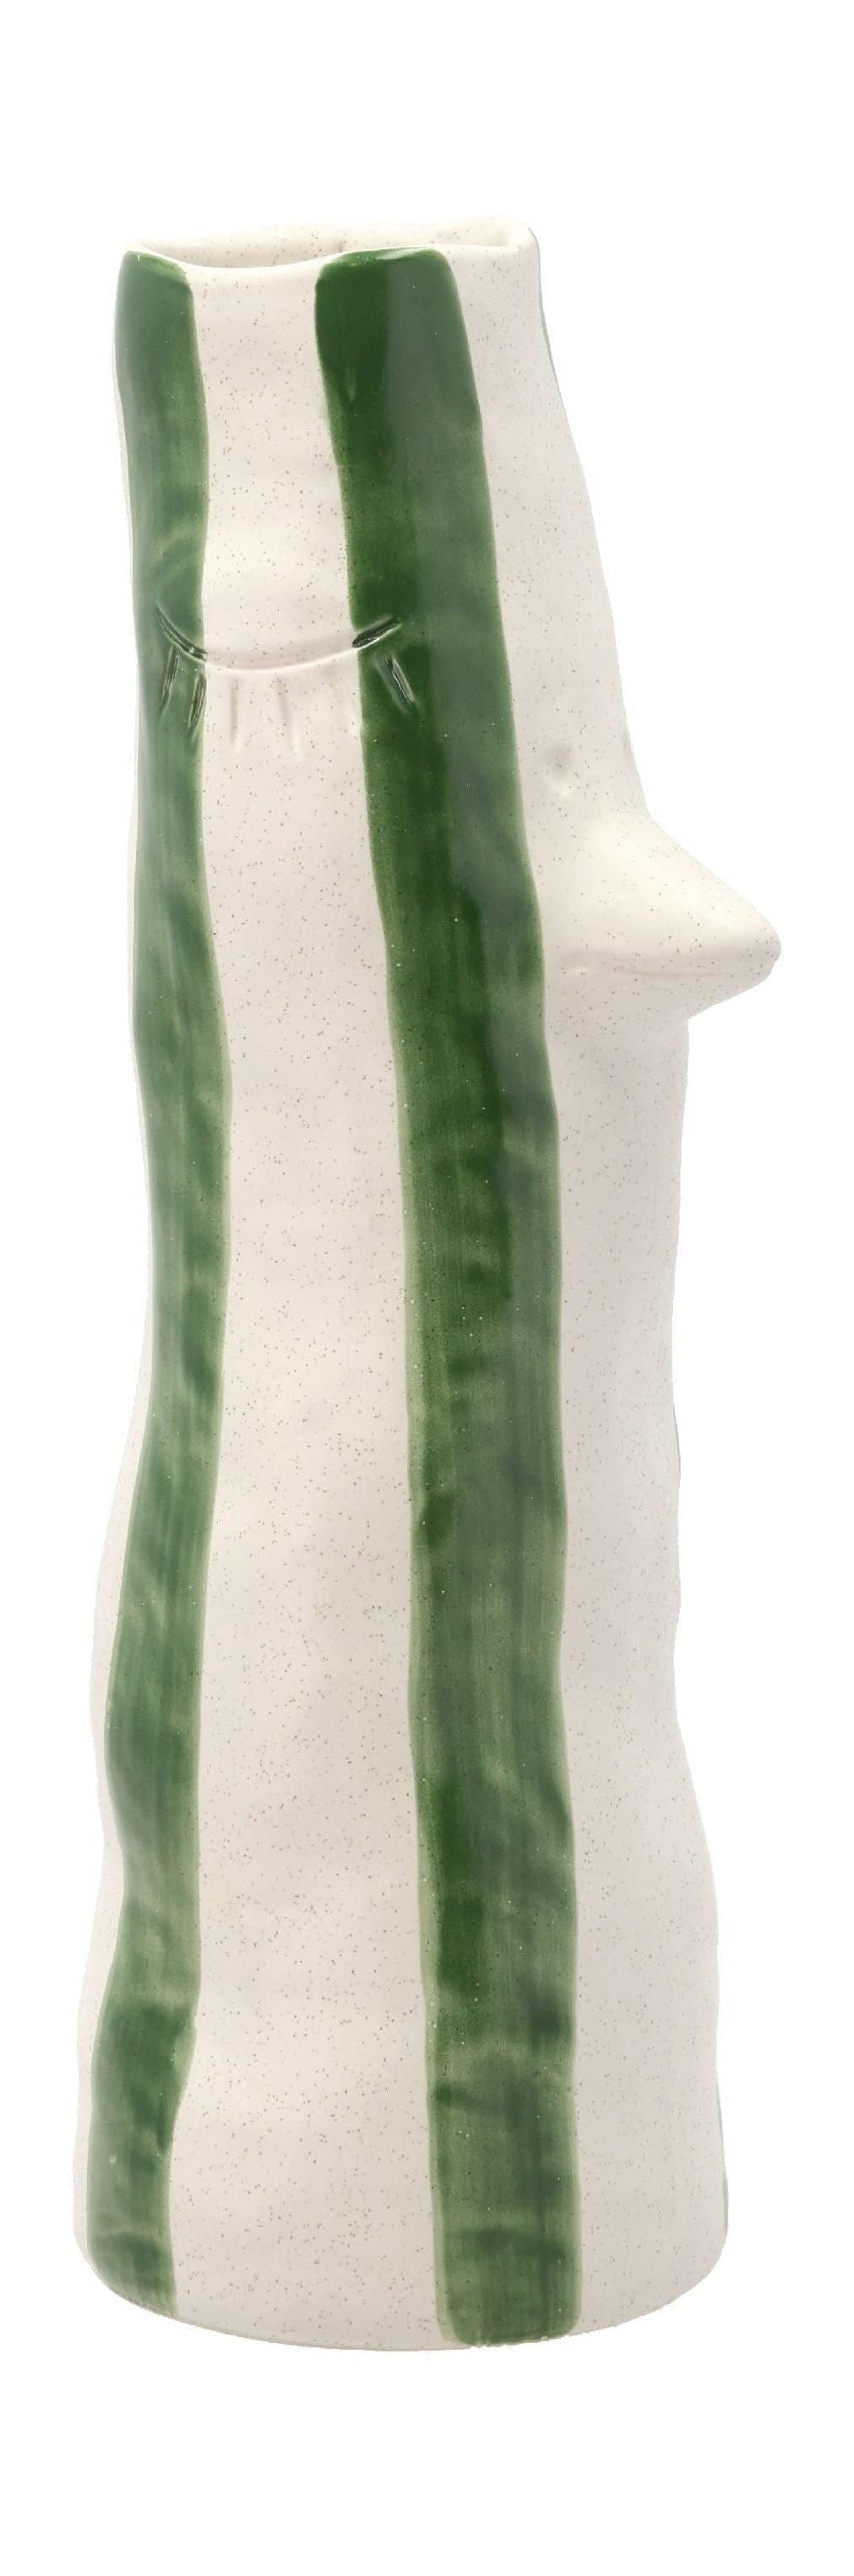 Villa Collection Styles Vase With Beak And Eyelashes Large, Green